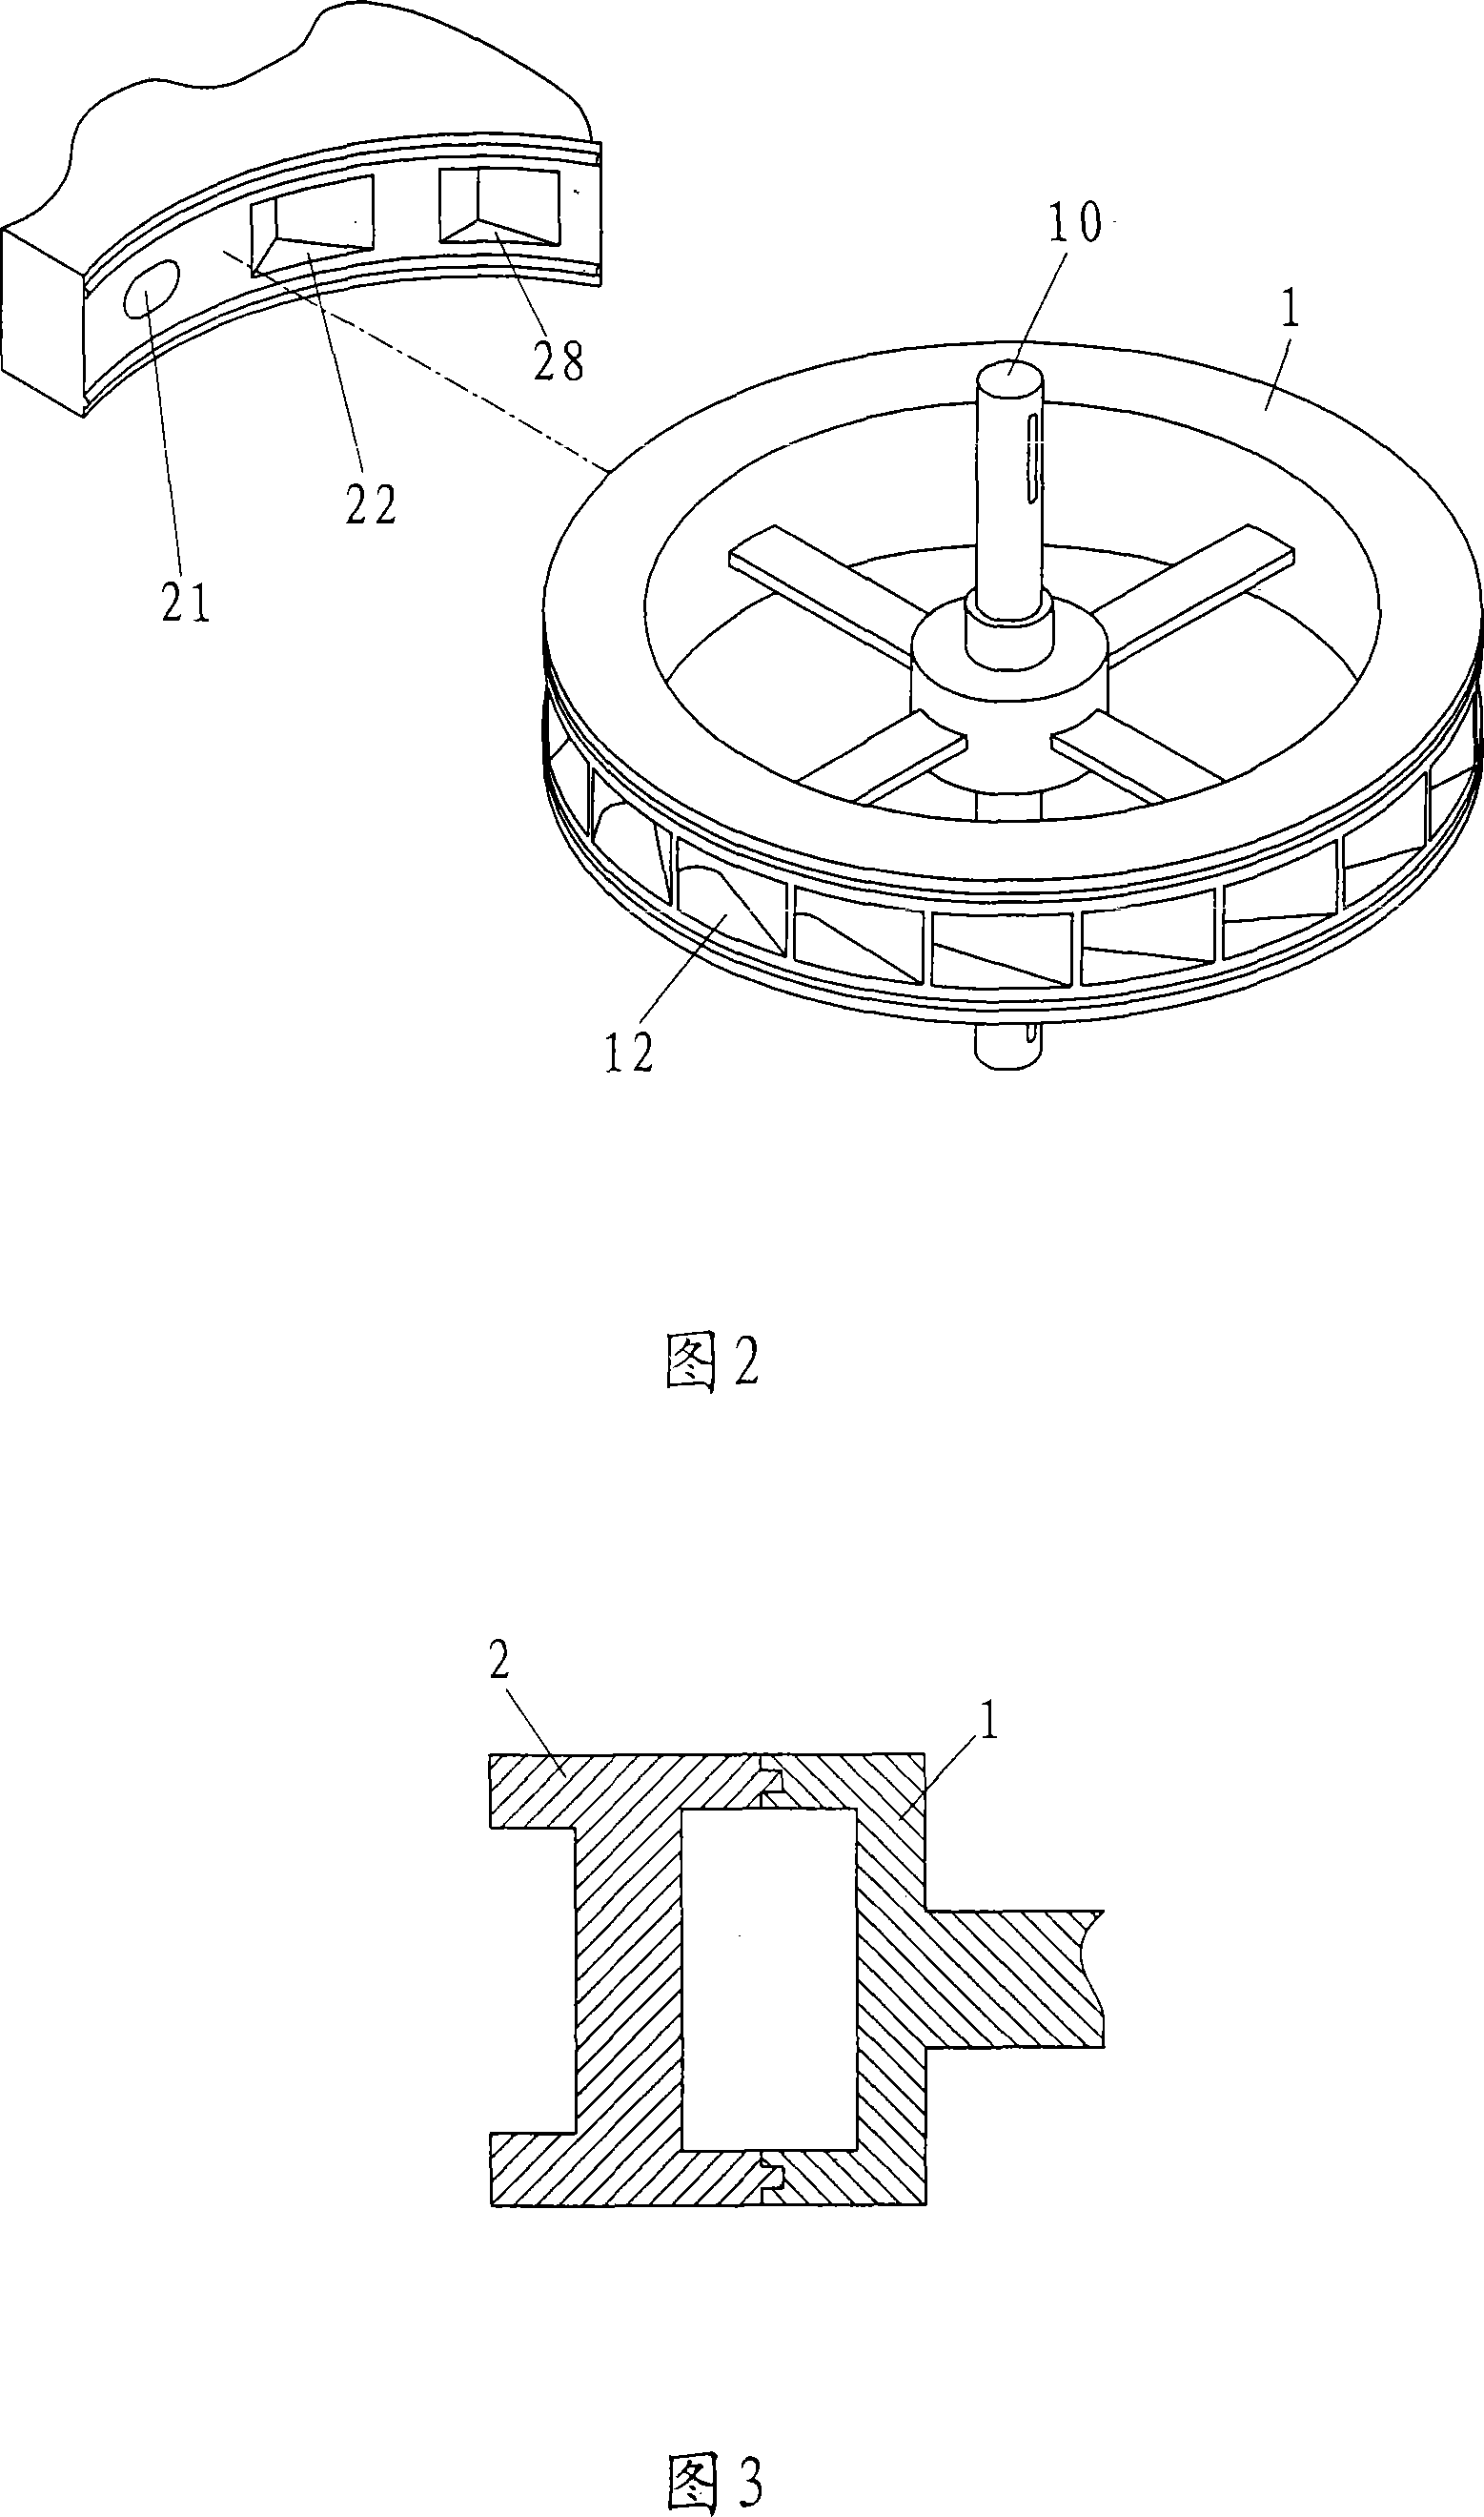 Rotary engine